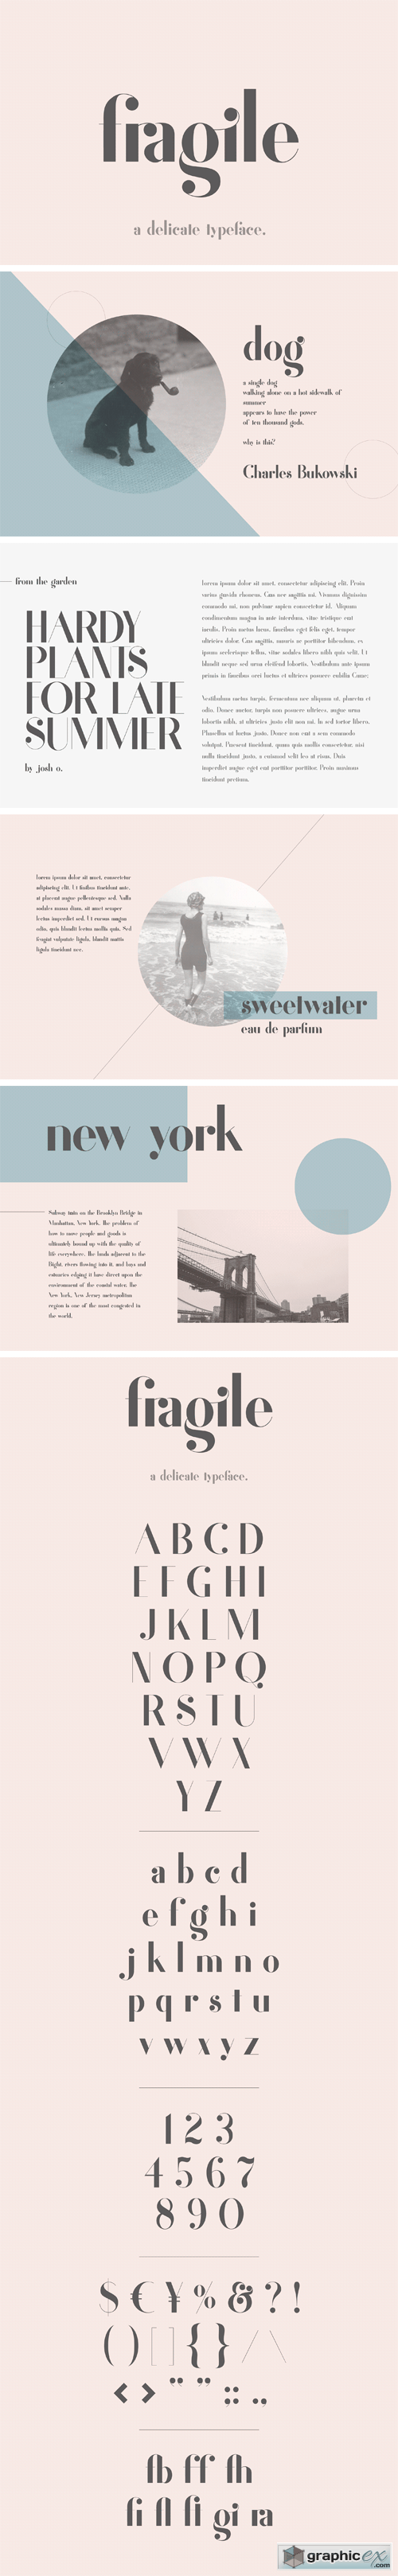 Fragile - A Delicate Typeface